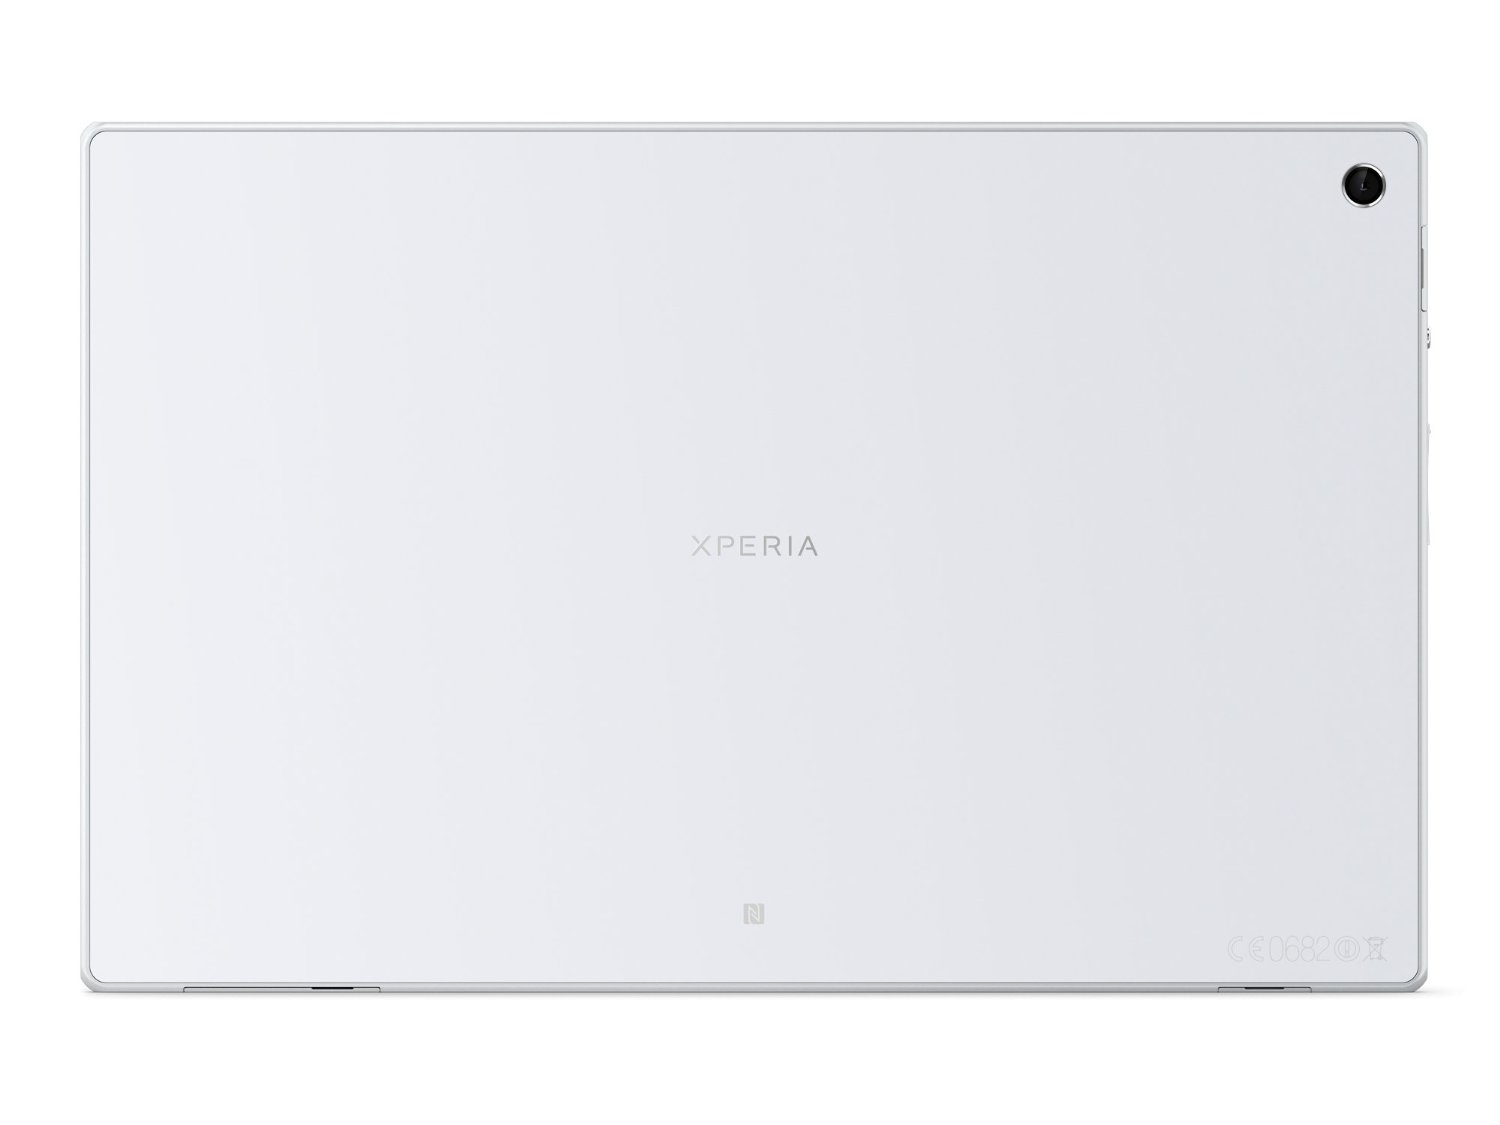 Xperia sgp321. Sony Xperia Tablet z 321. Sony Xperia Tablet z sgp321. Sony Xperia Tablet z 321 белый. Sony Xperia Tablet s sgp321.